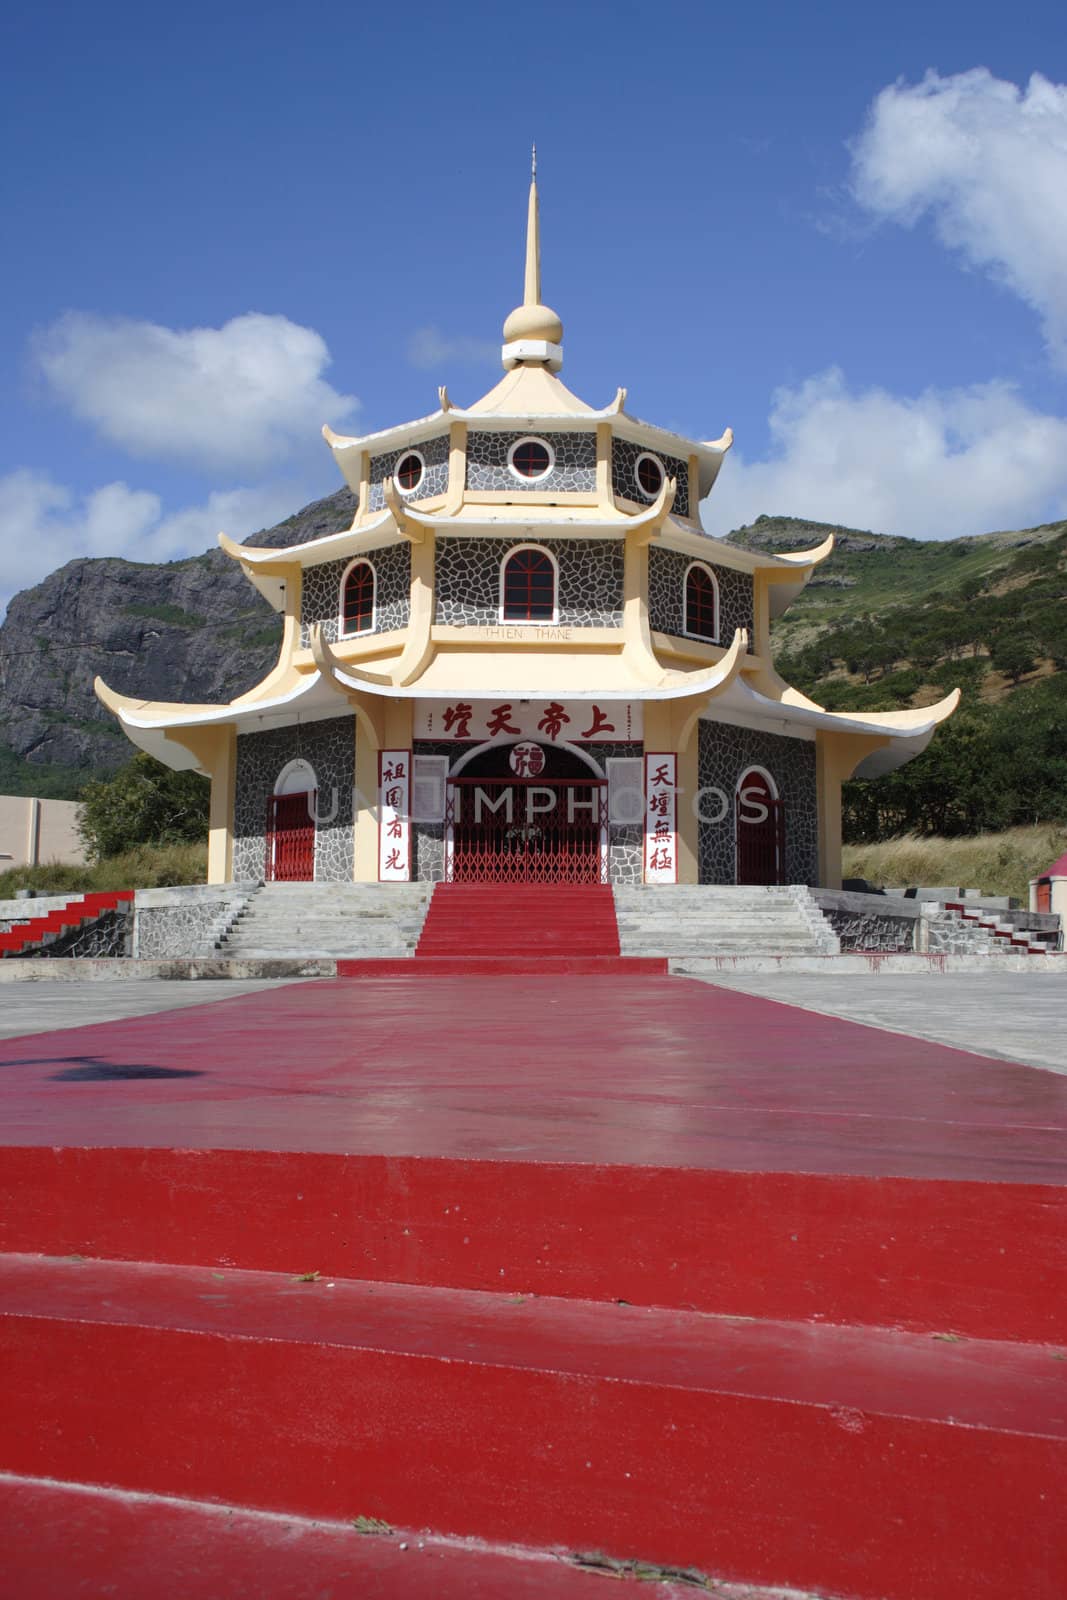 Image of Thien Thane, a pagoda in Port Louis, Mauritius. Portrait orientation.